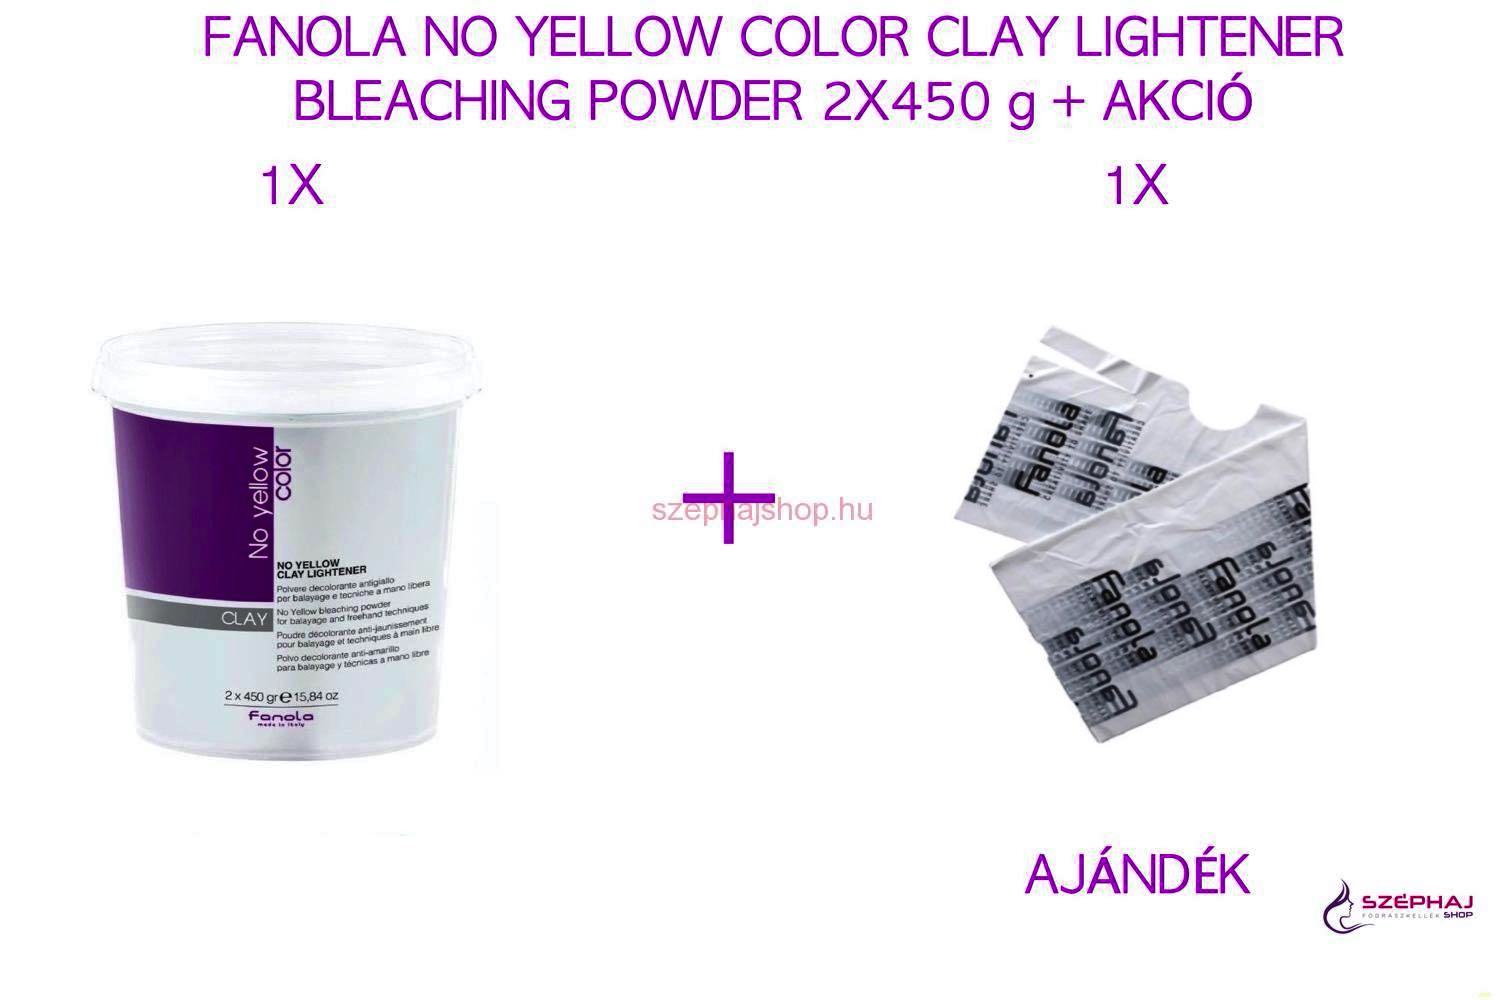 FANOLA NO YELLOW COLOR CLAY LIGHTENER BLEACHING POWDER 2X450 g + AKCIÓ 